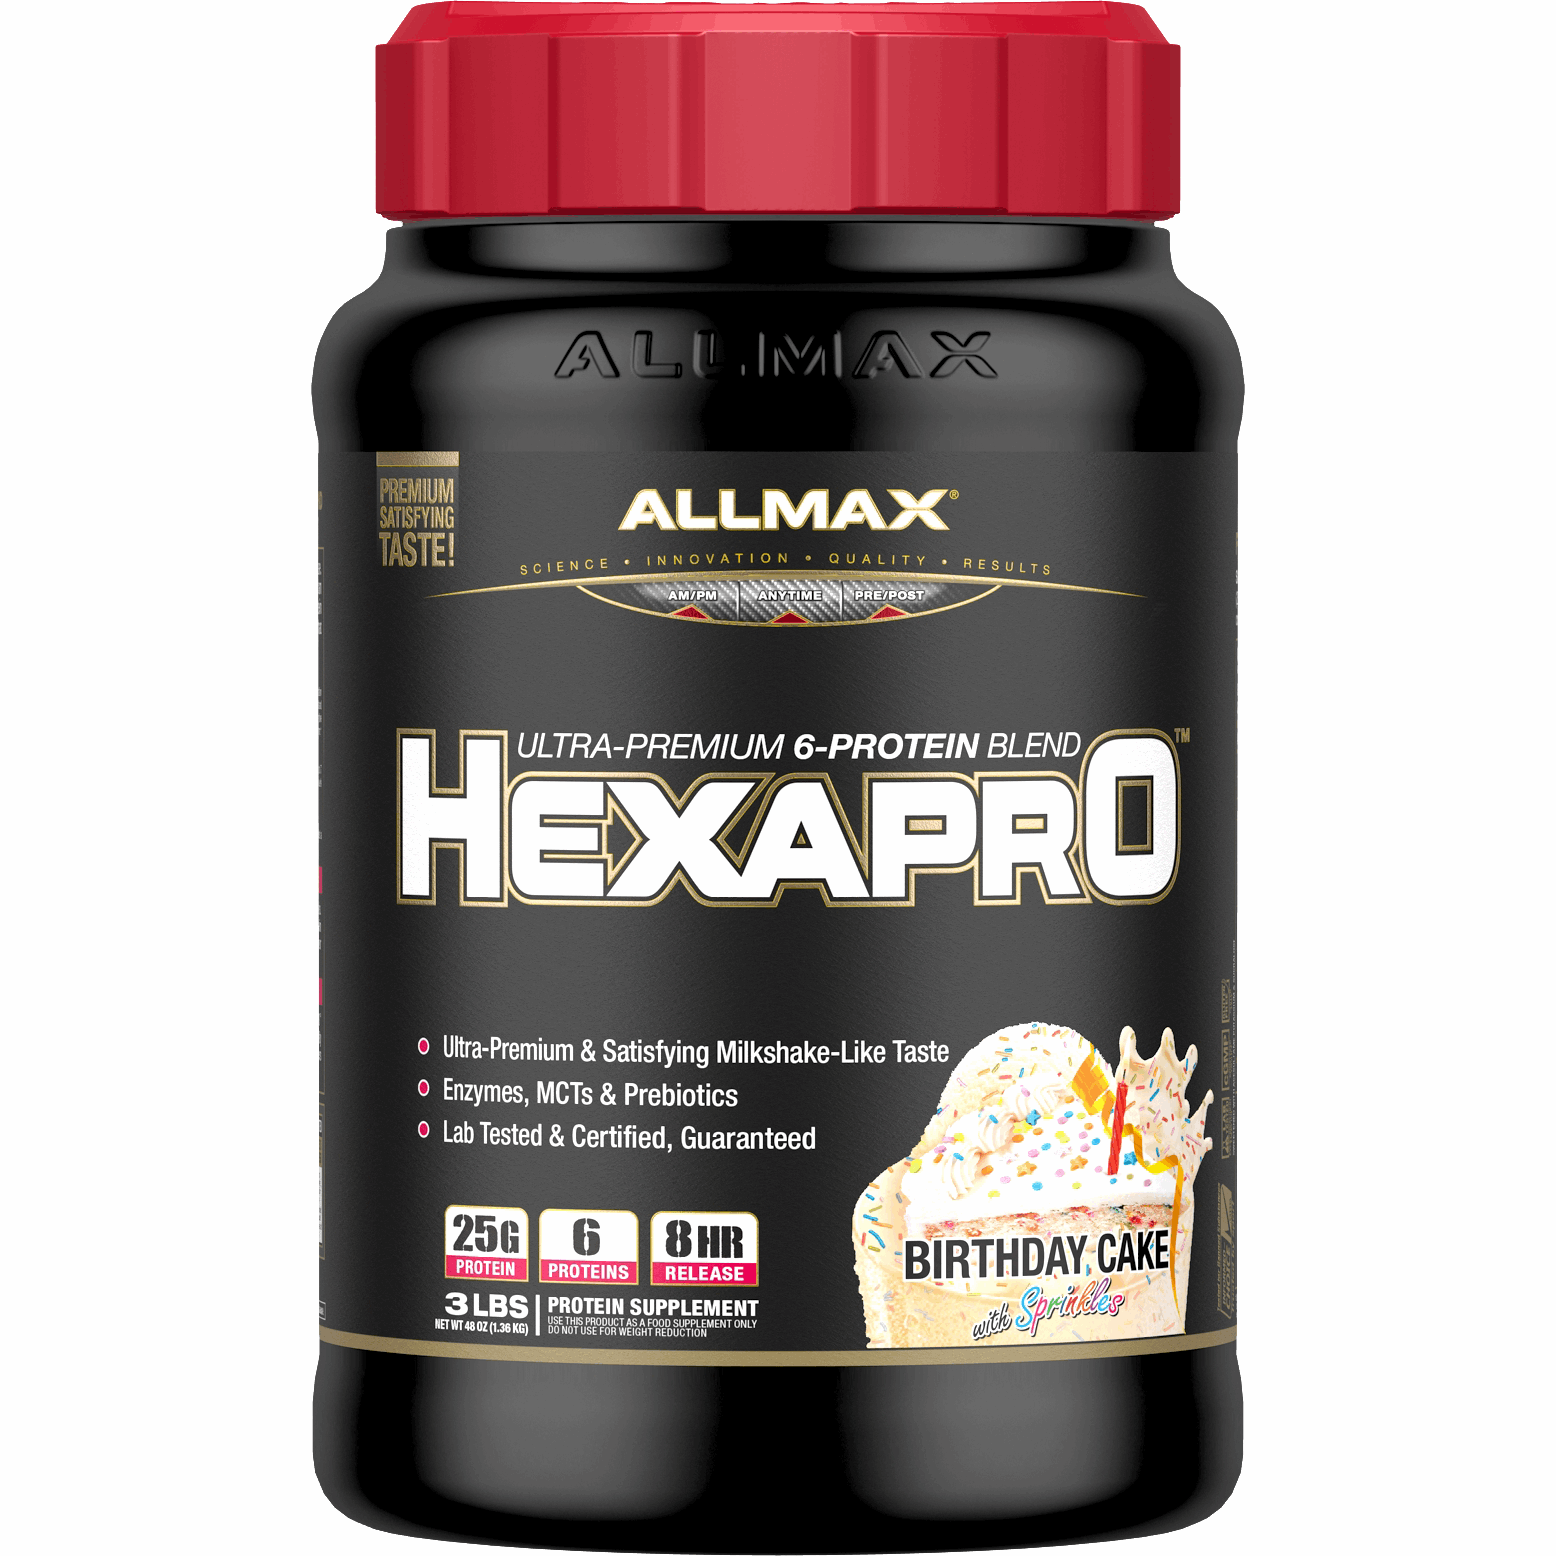 ALLMAX Hexapro (2lbs) Whey Protein Blend Birthday Cake Allmax Nutrition allmax-hexapro-3lbs